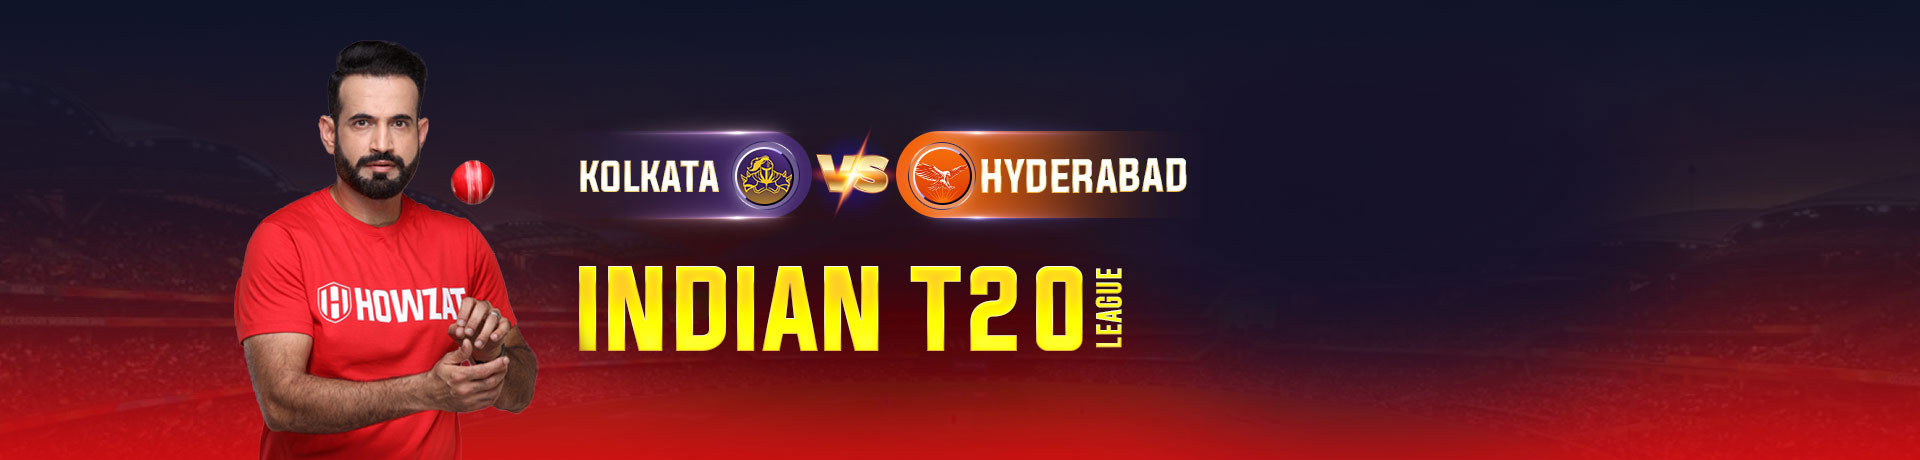 Kolkata vs Hyderabad  Indian T20 League